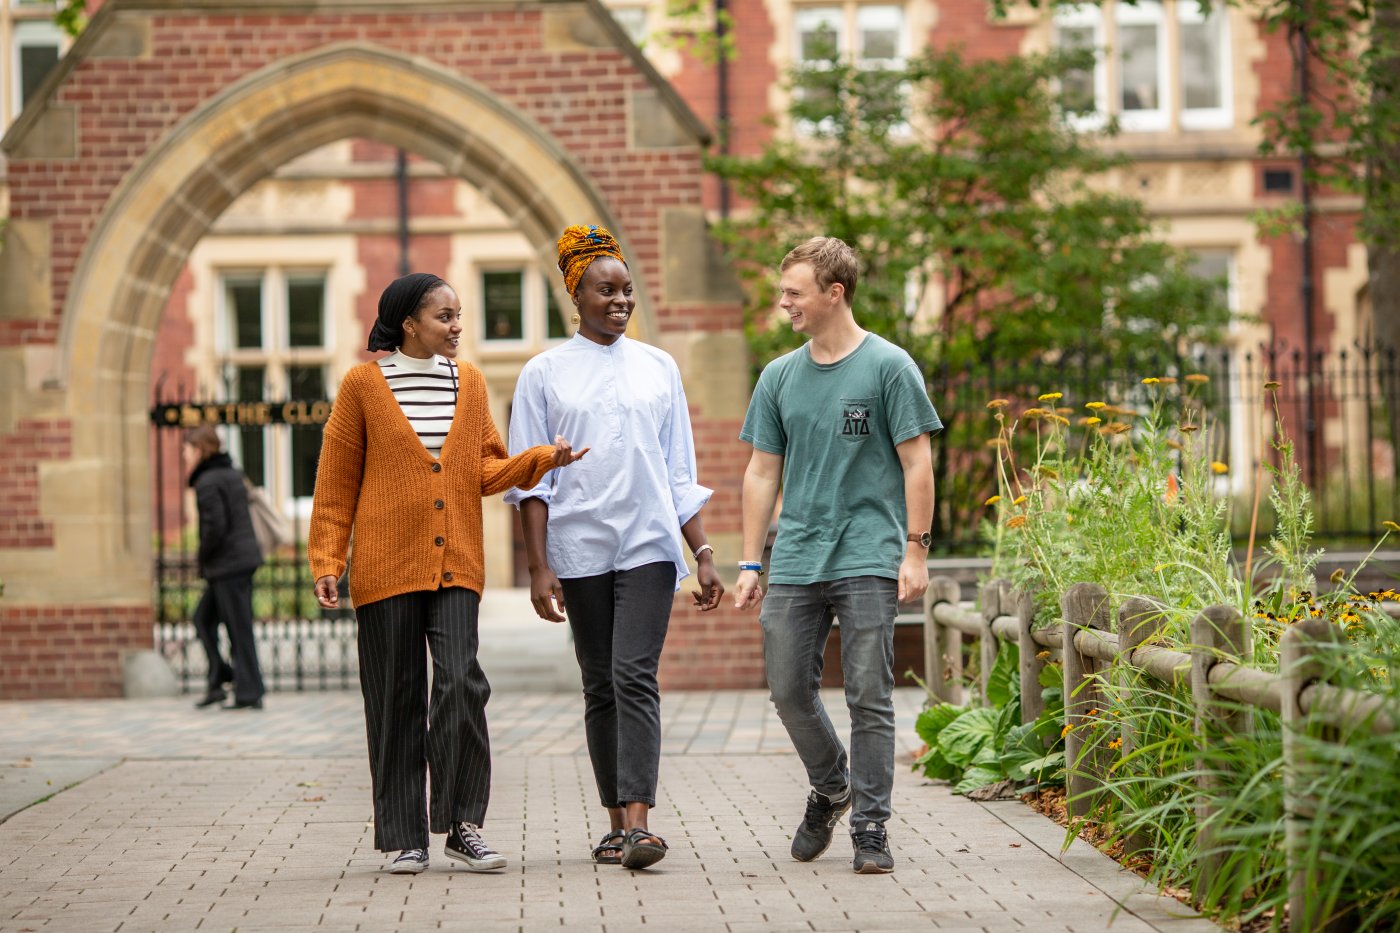 Post graduate students walking around the University of Leeds campus.